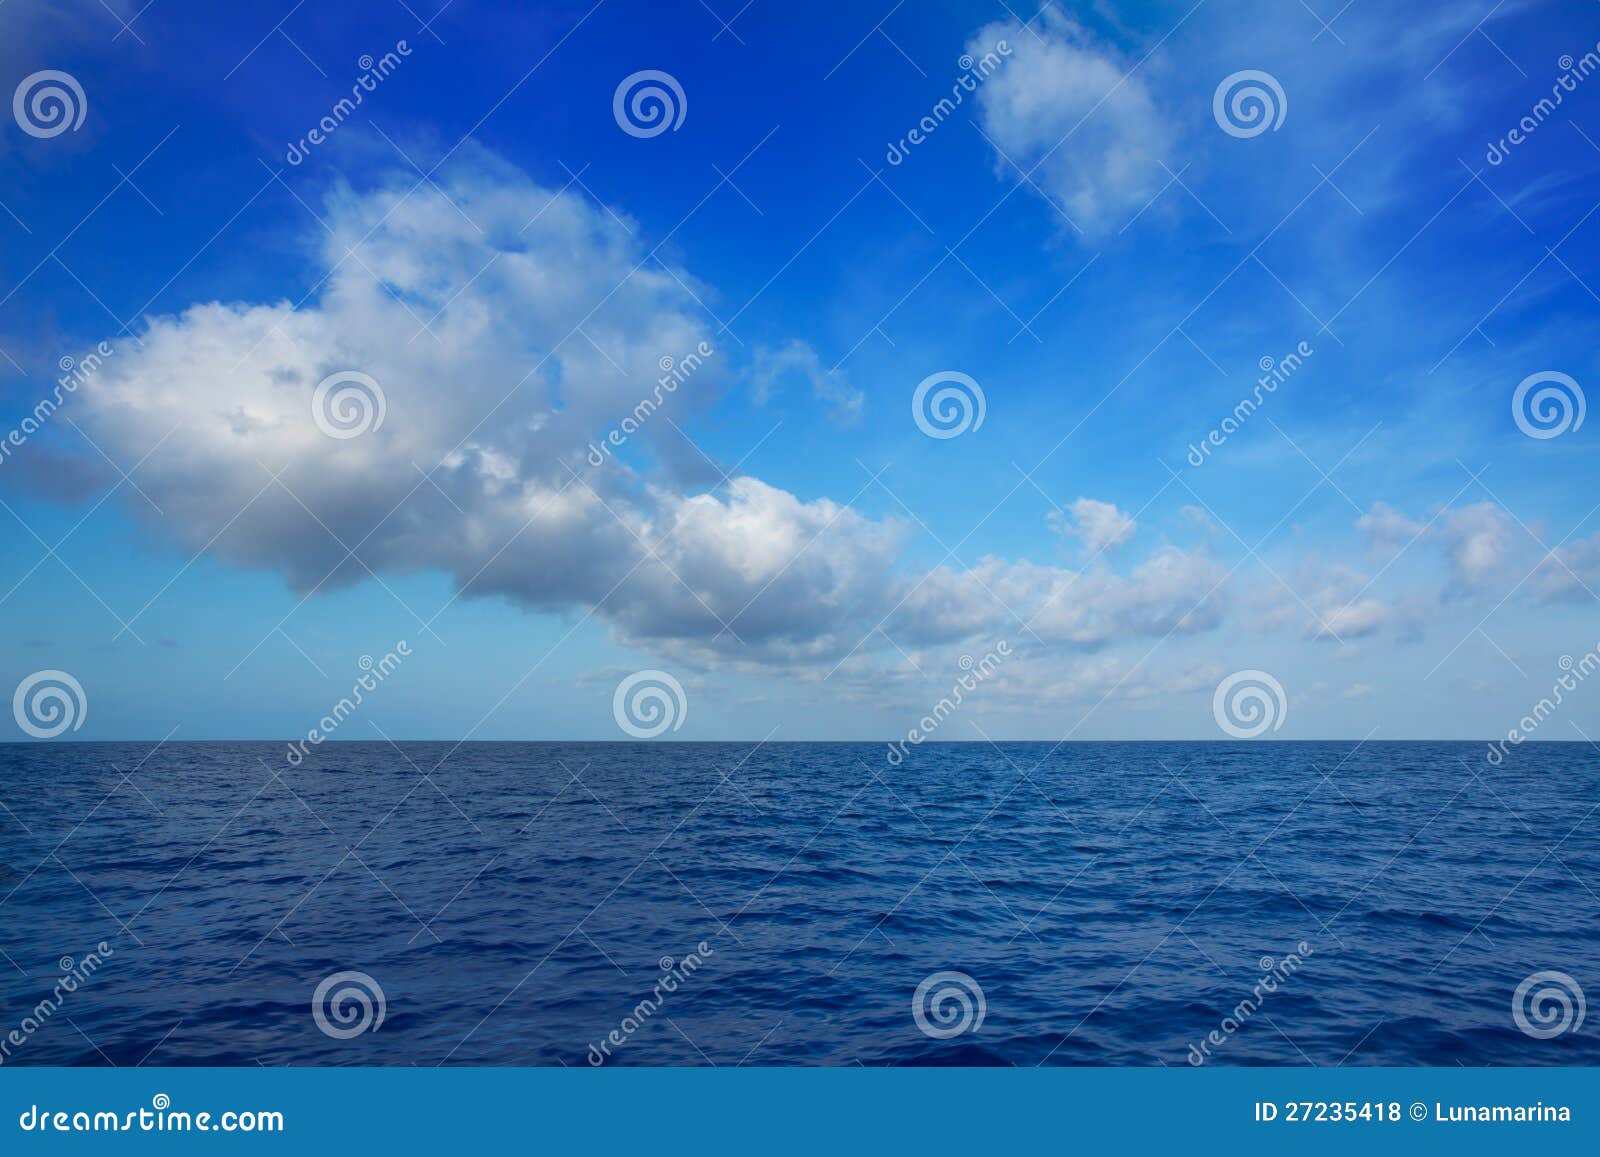 cumulus clouds in blue sky over water horizon